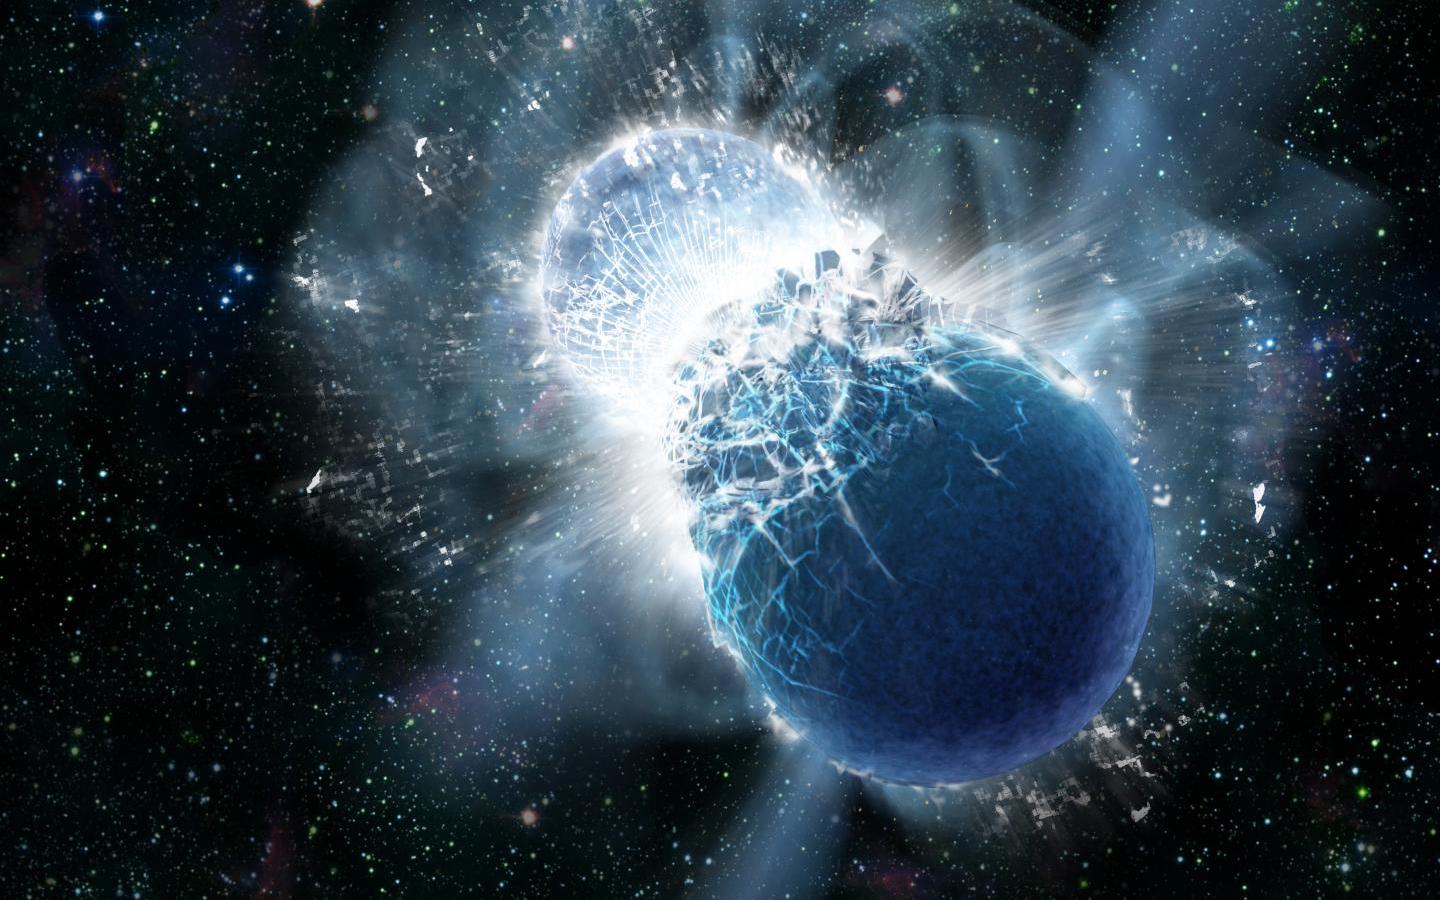 neutron star merger and gamma ray burst